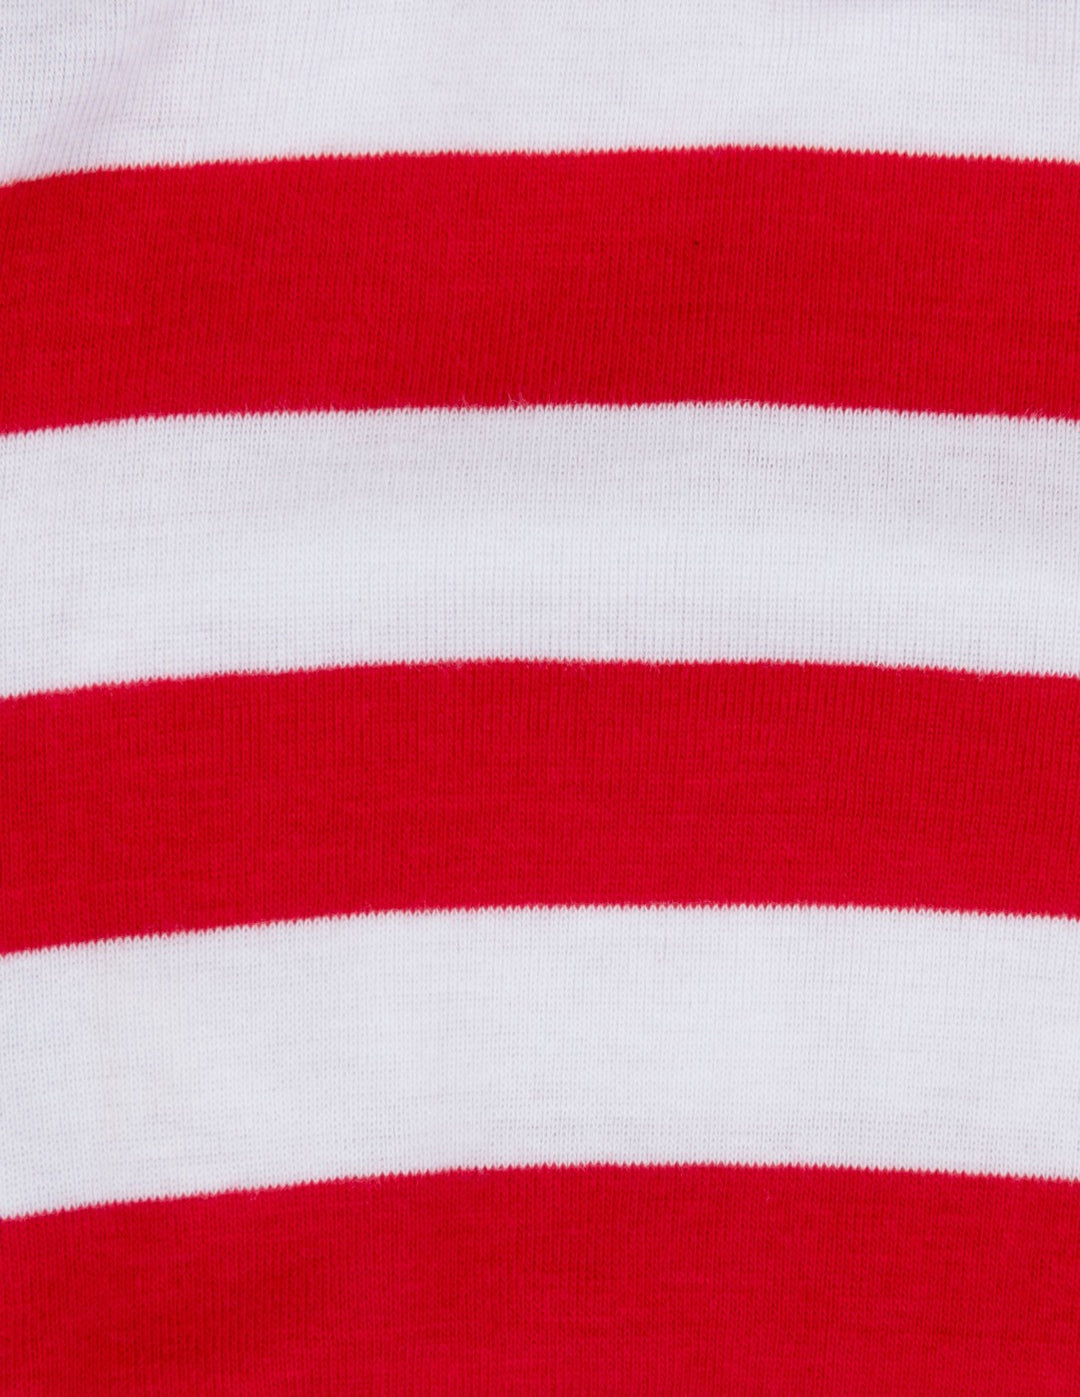 red and white striped dog pajamas